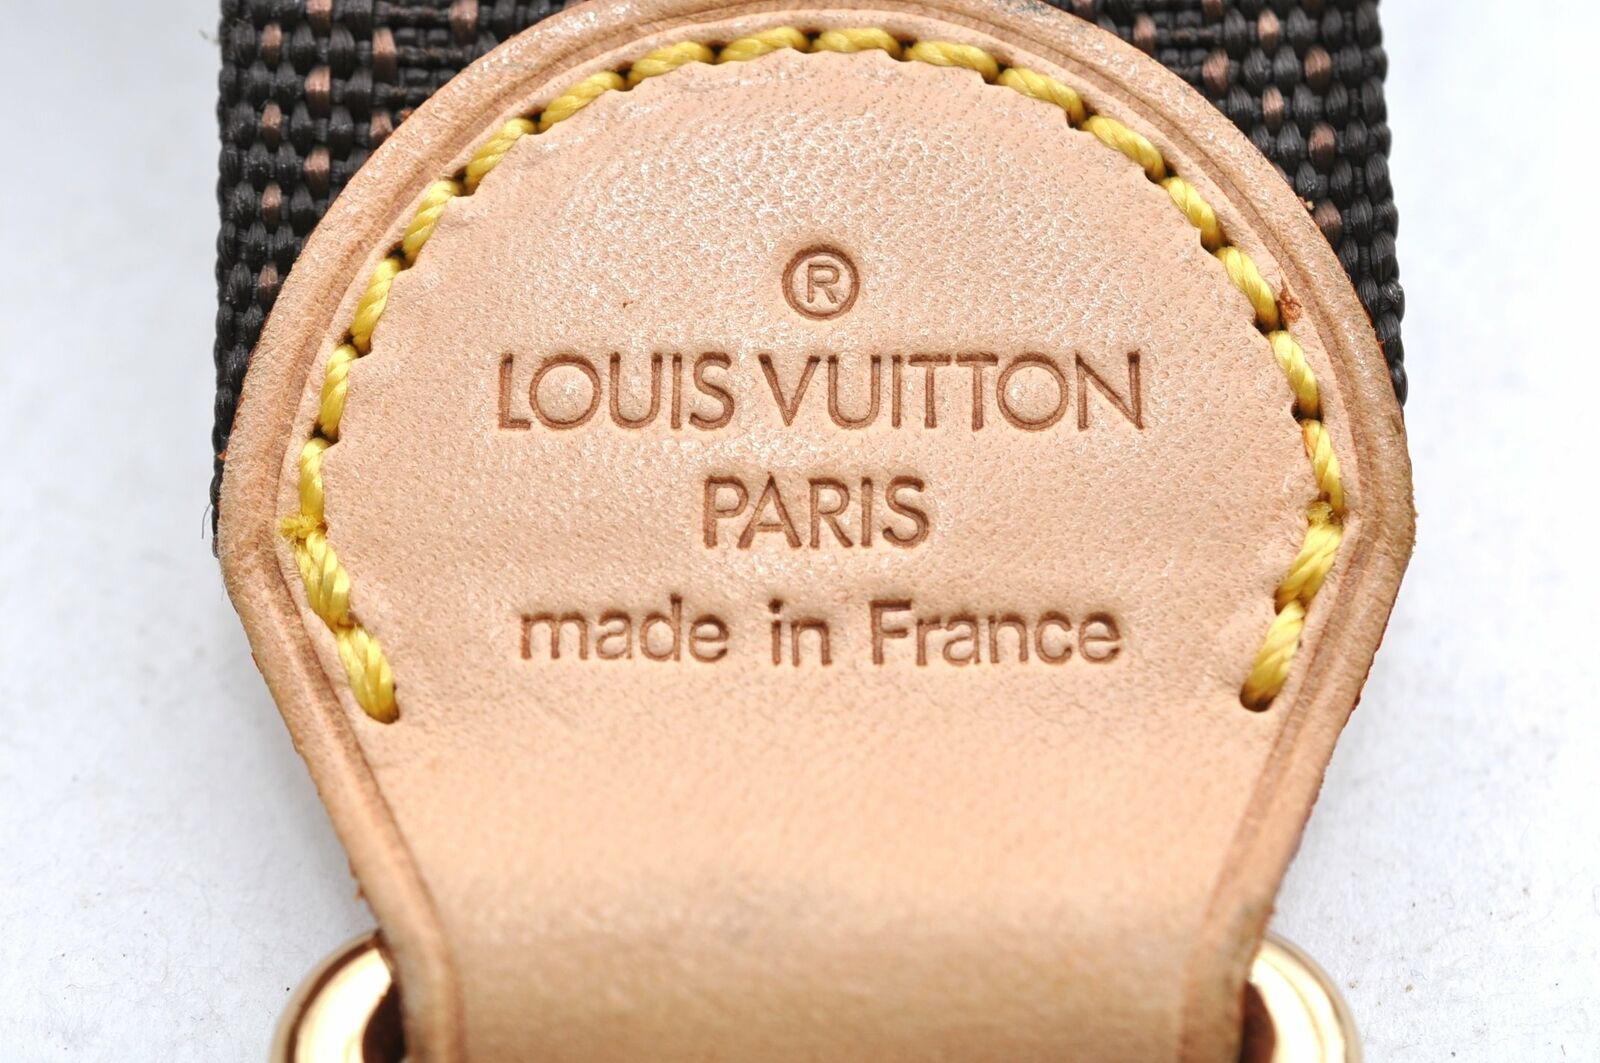 LOUIS VUITTON Leather Adjustable Trevi Strap Brown 75070